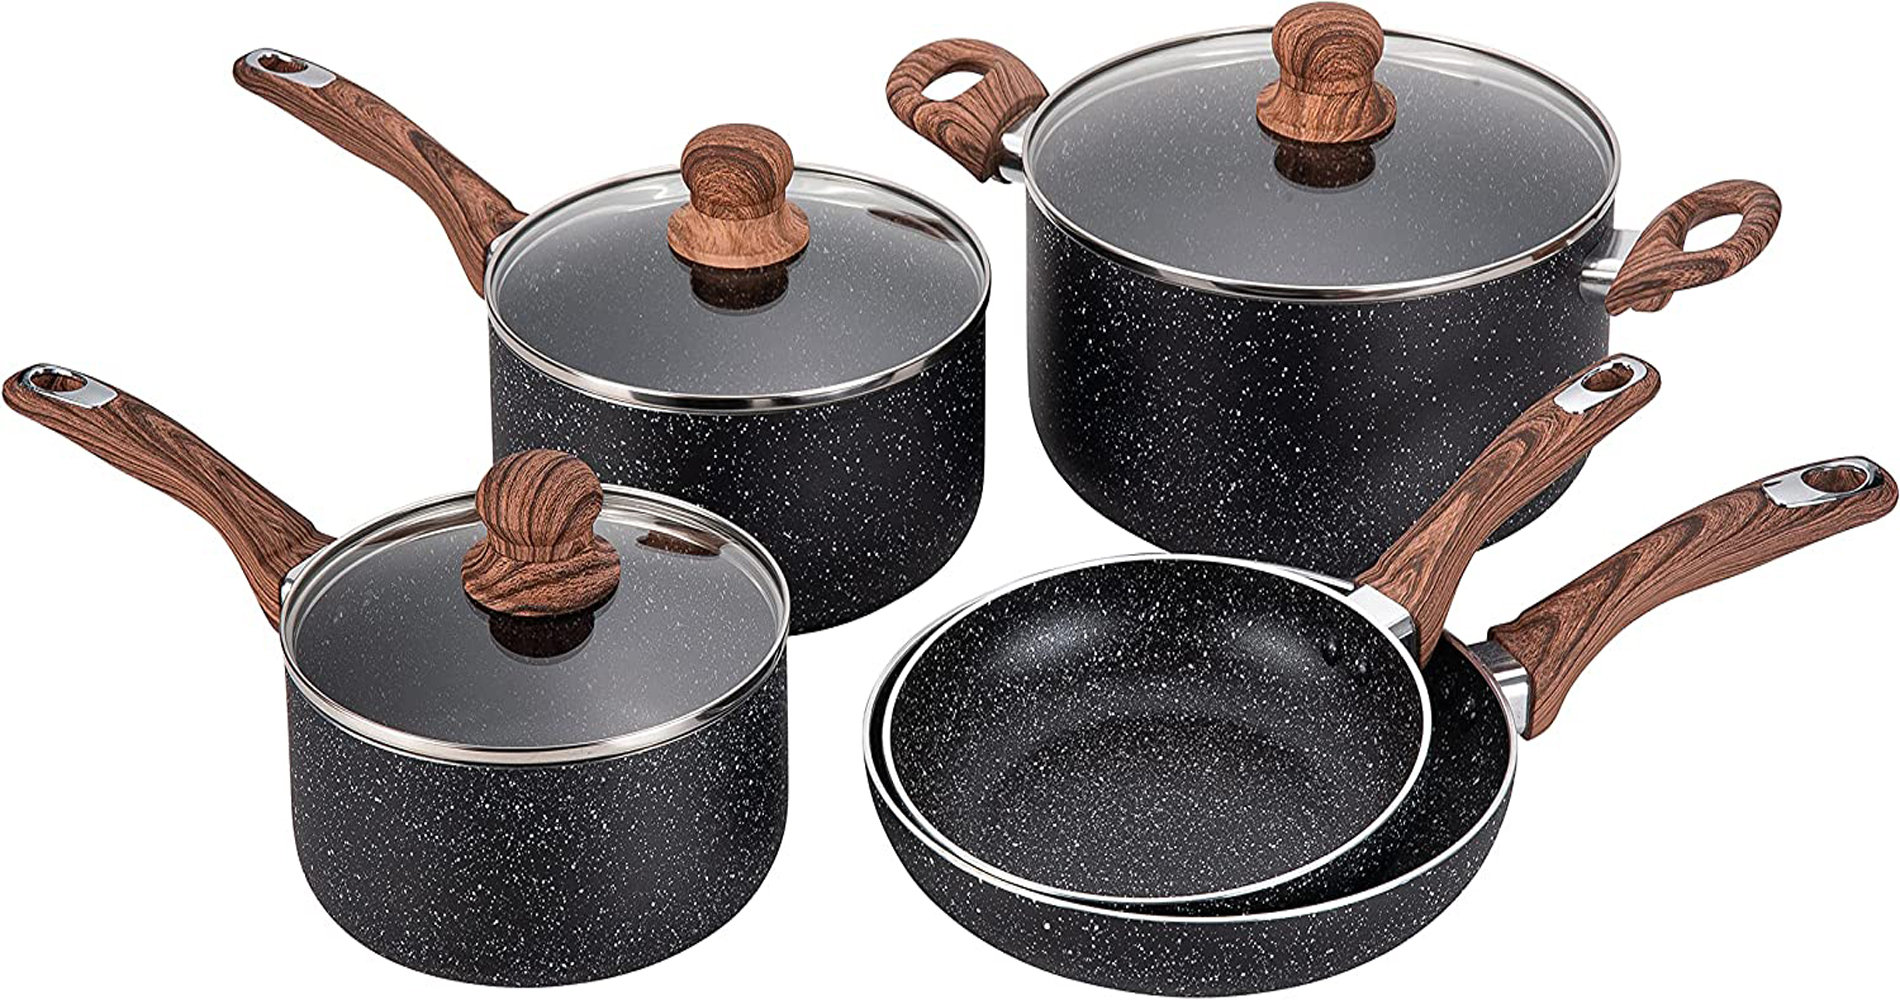 Hamilton Beach Cast Iron Dutch Oven Pot, Frying Pans, Sauce Pan